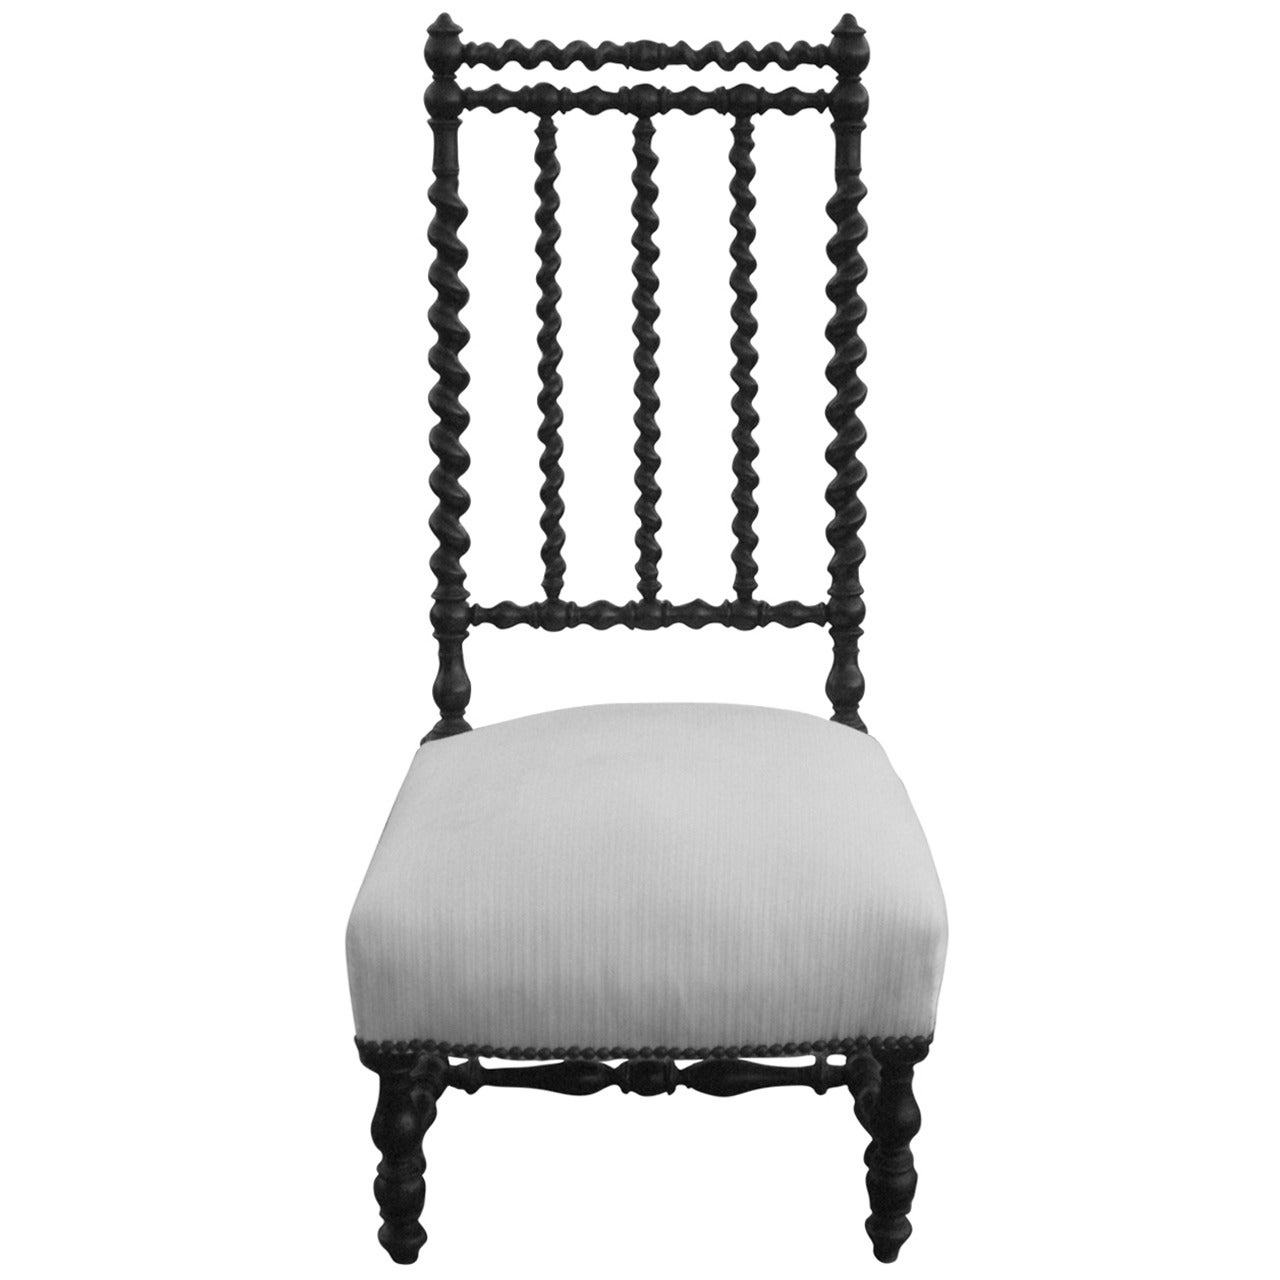 19th Century American Ebonized Spindle Slipper Chair